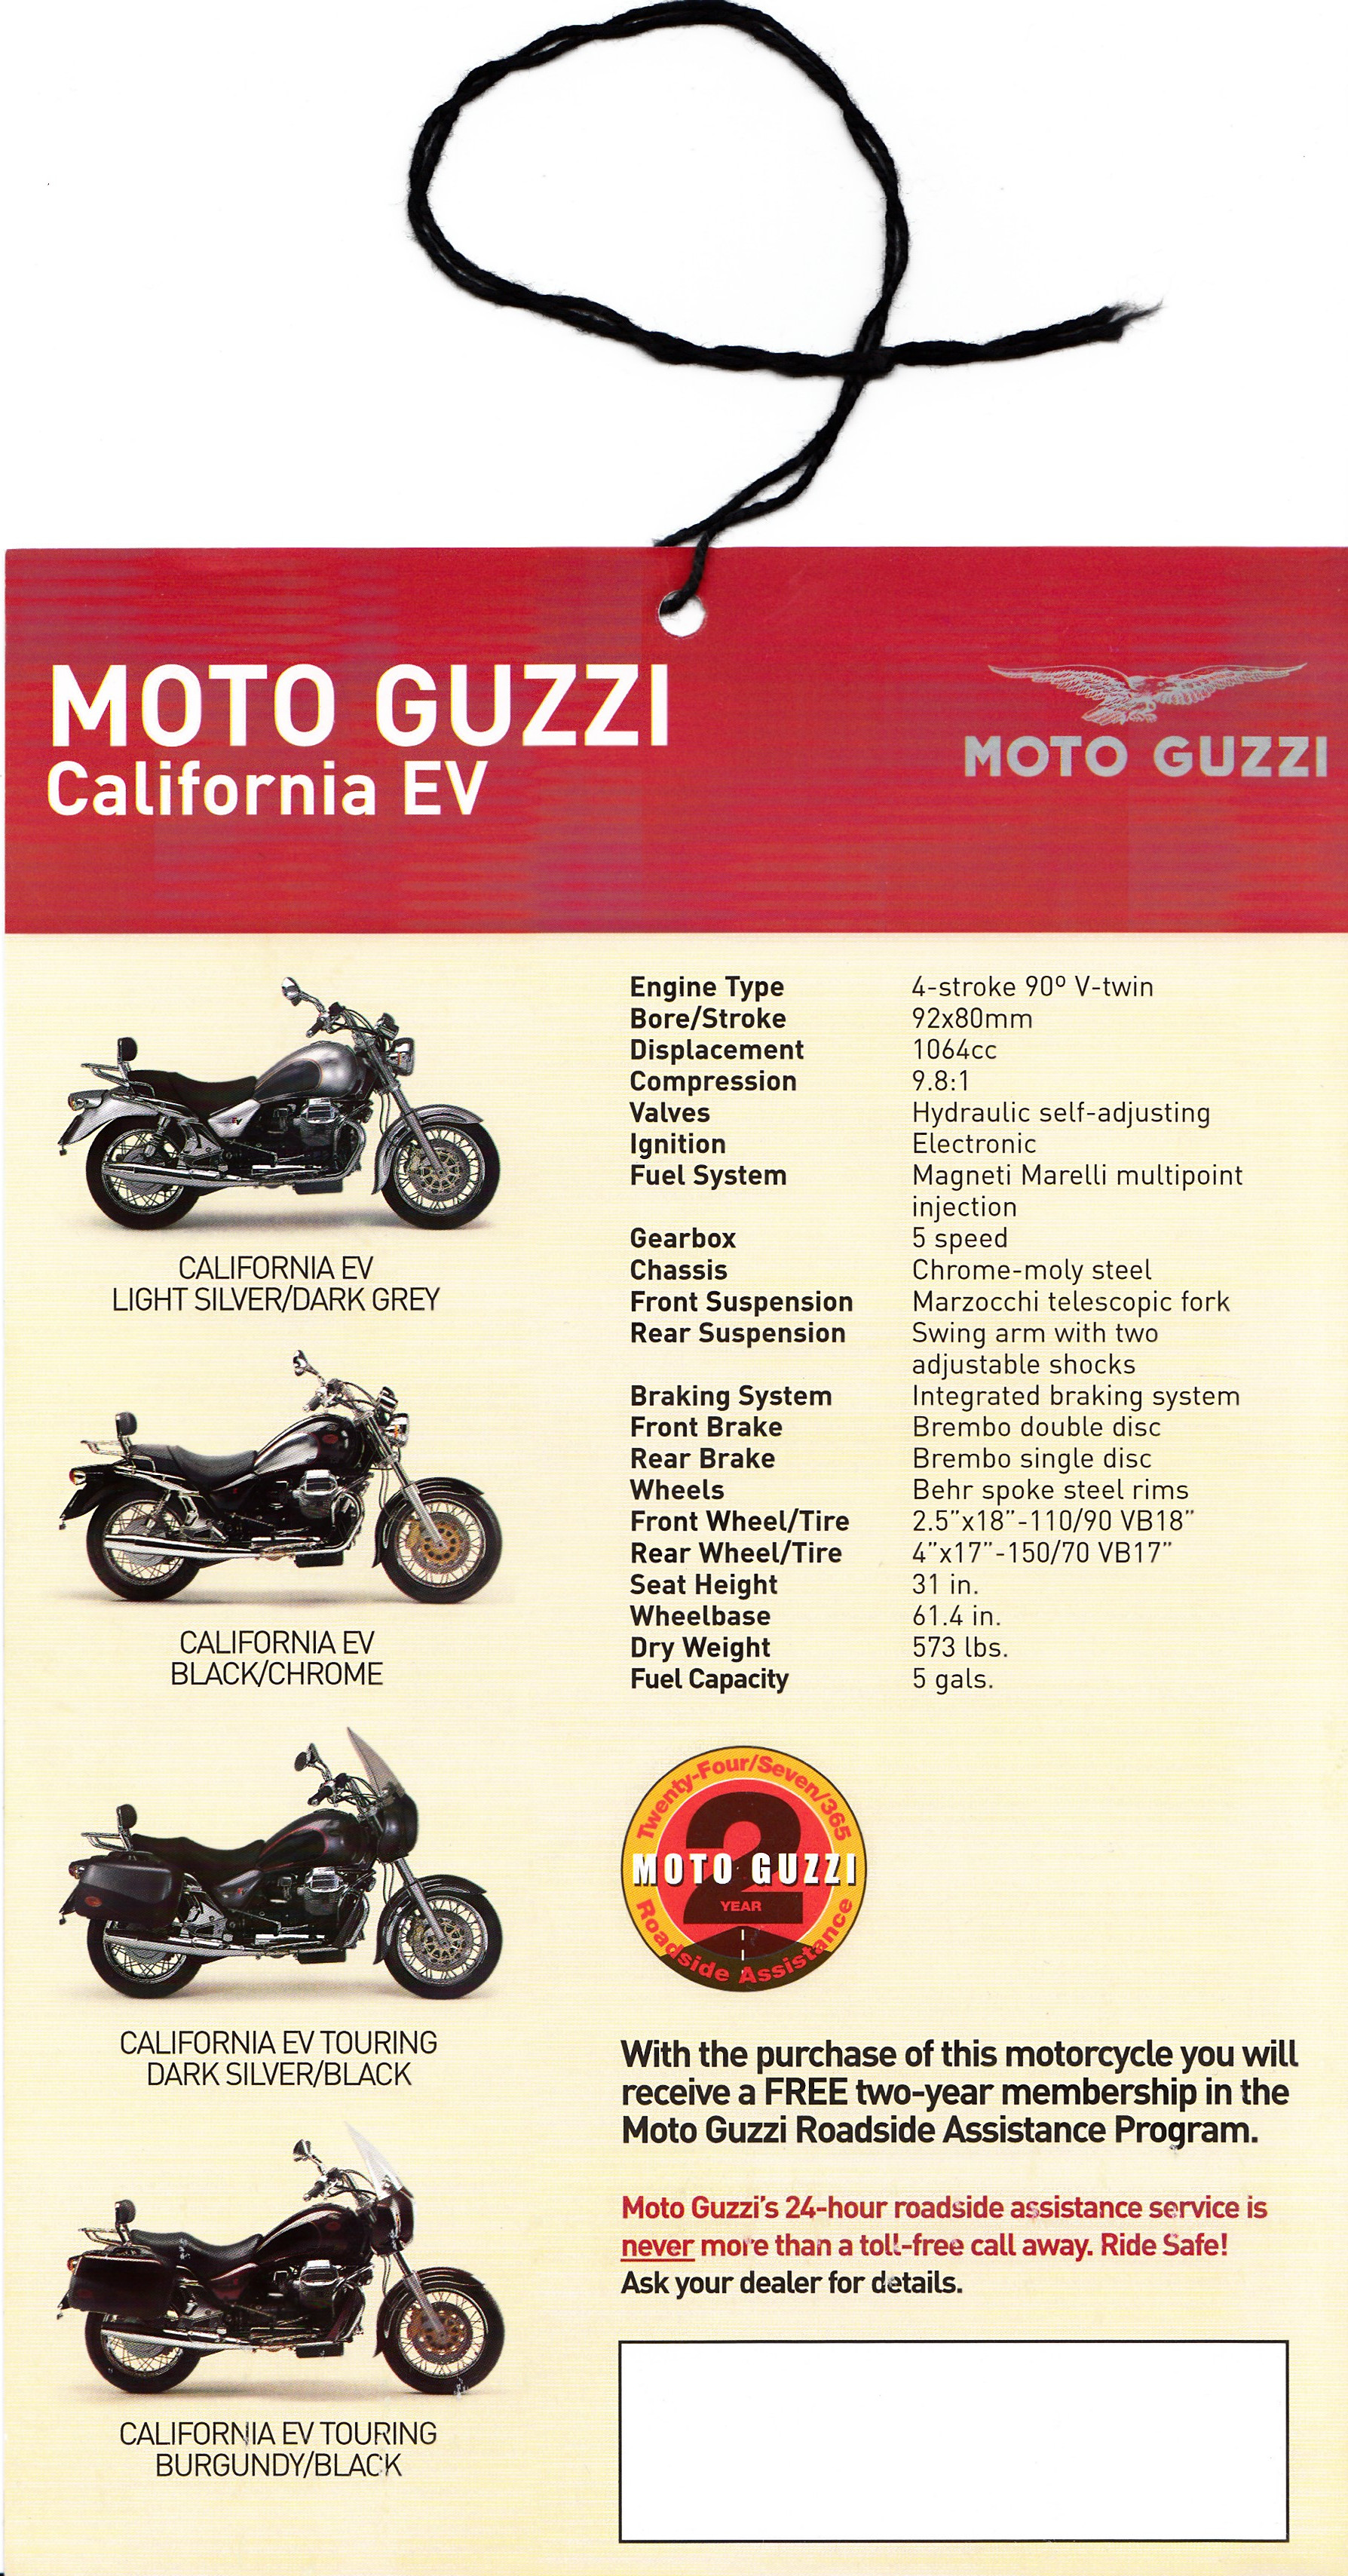 Tag - Moto Guzzi California EV